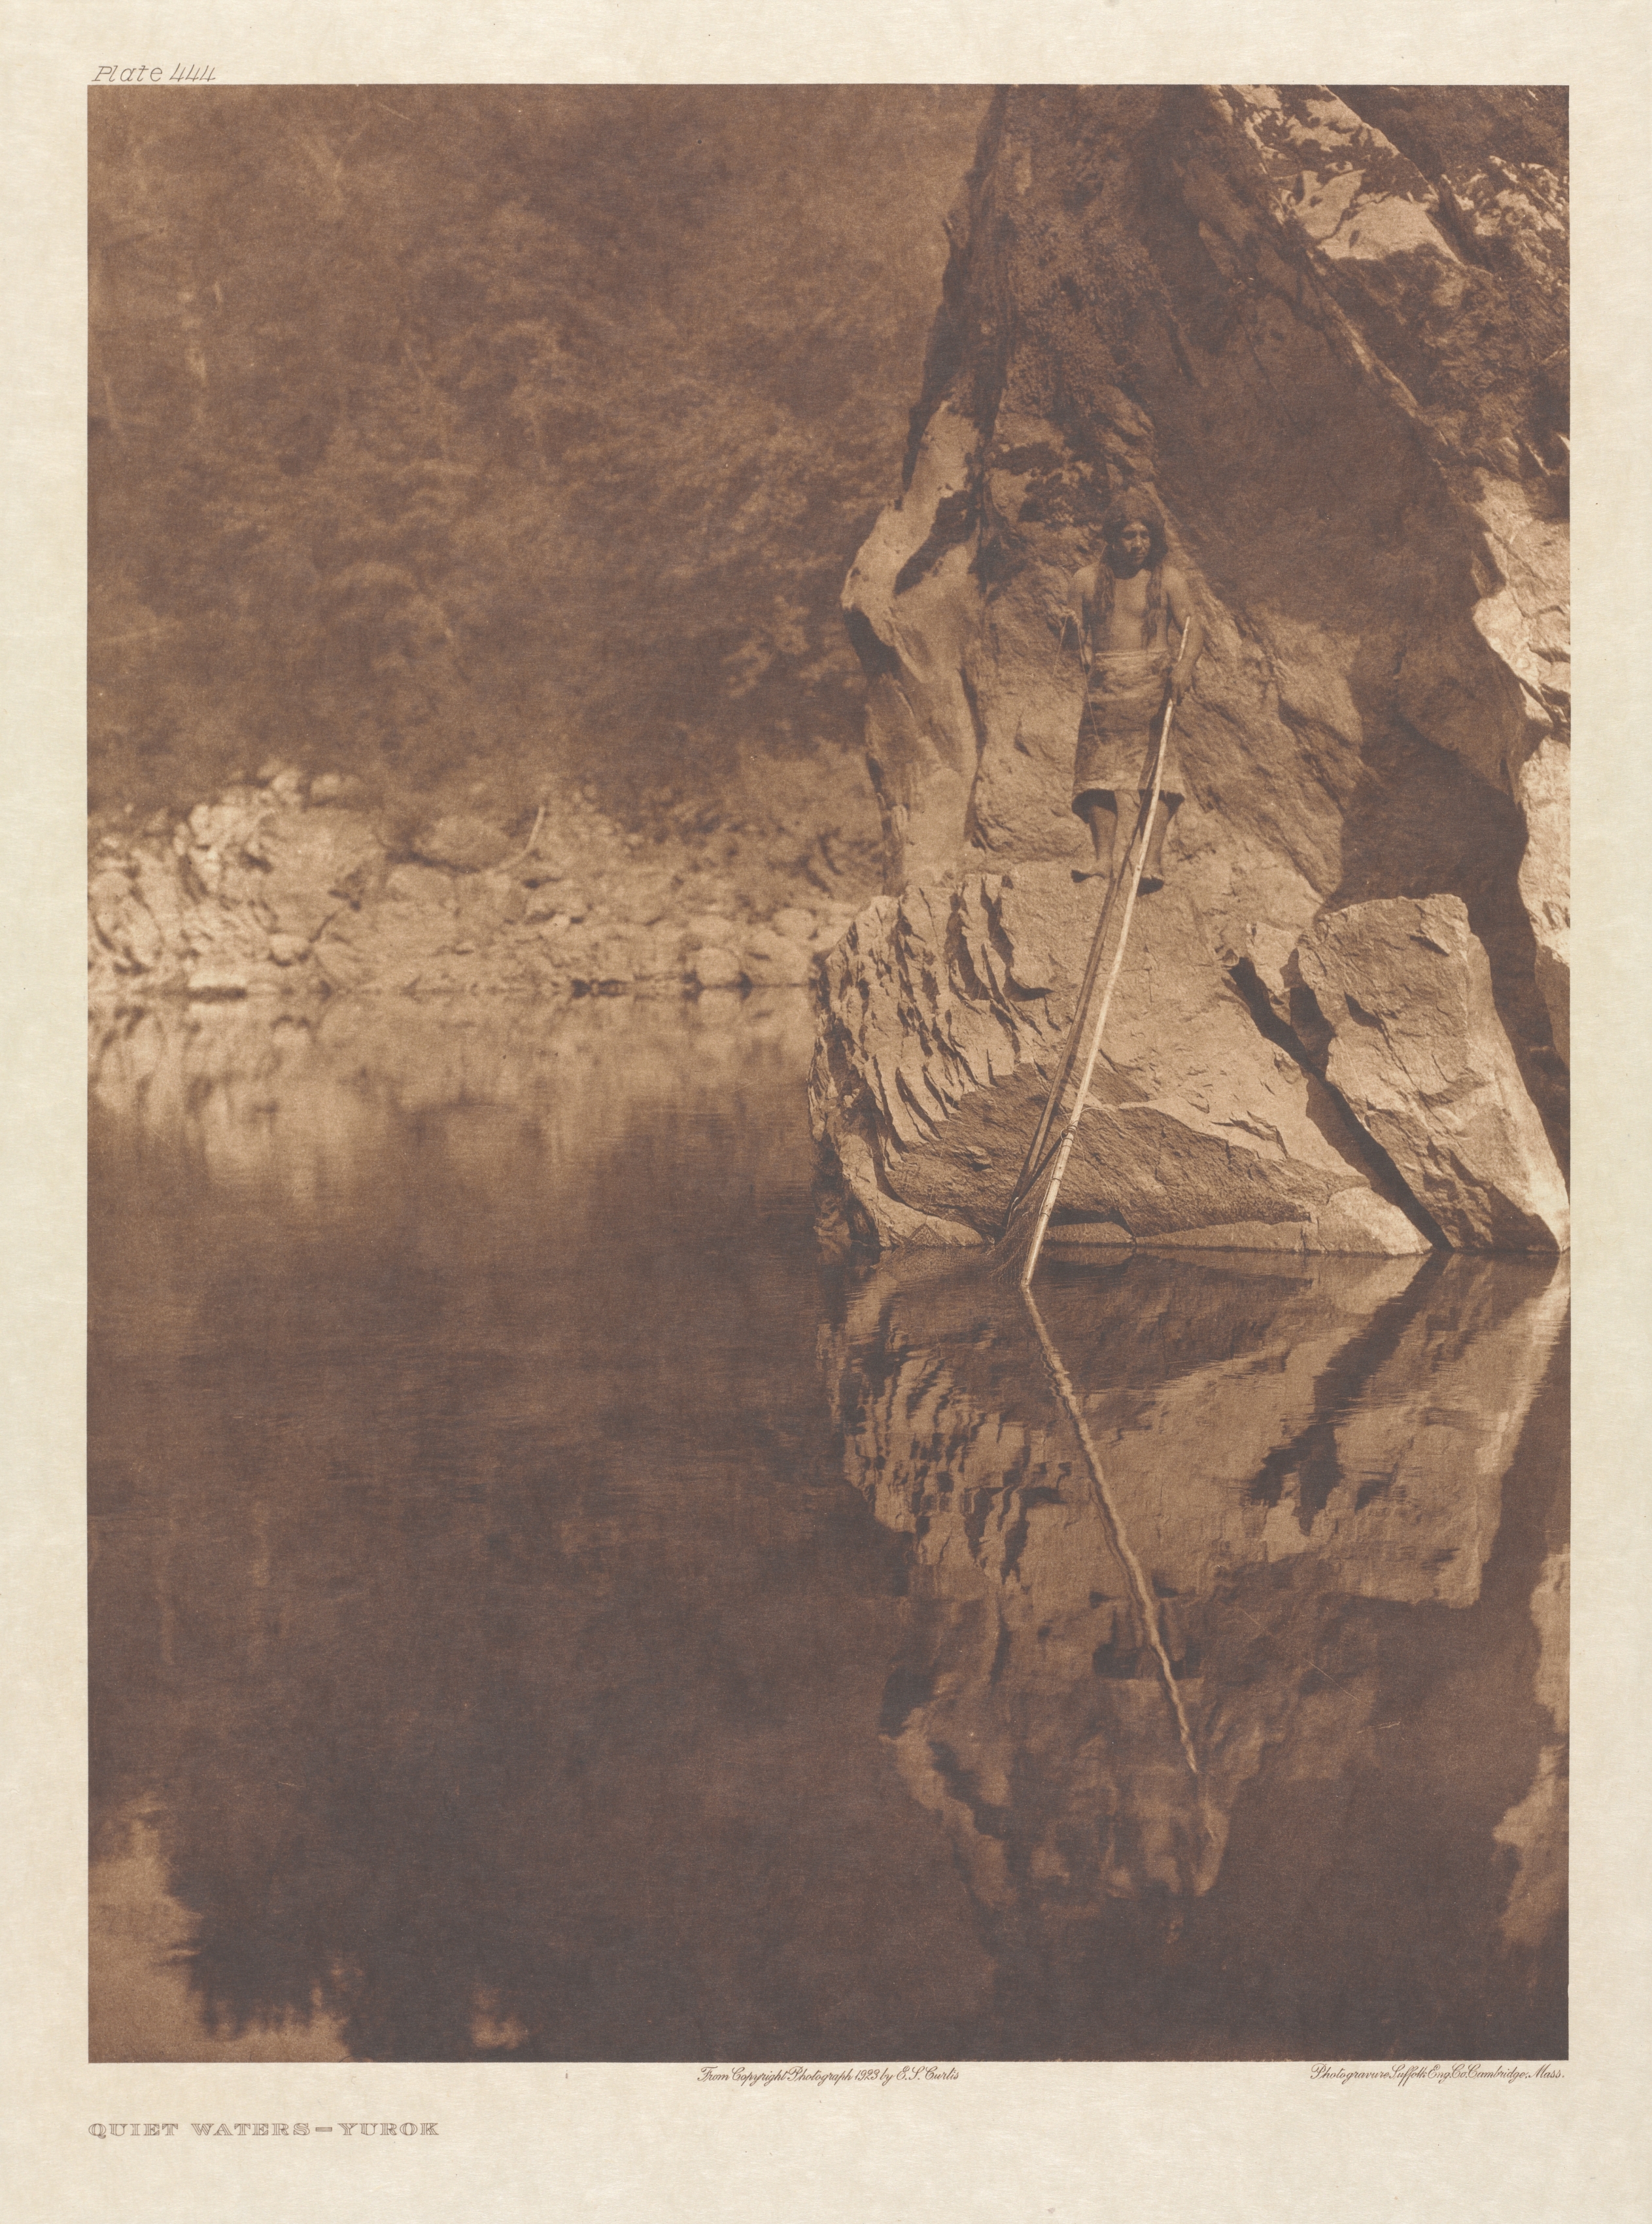 Portfolio XIII, Plate 444: Quiet Waters - Yurok